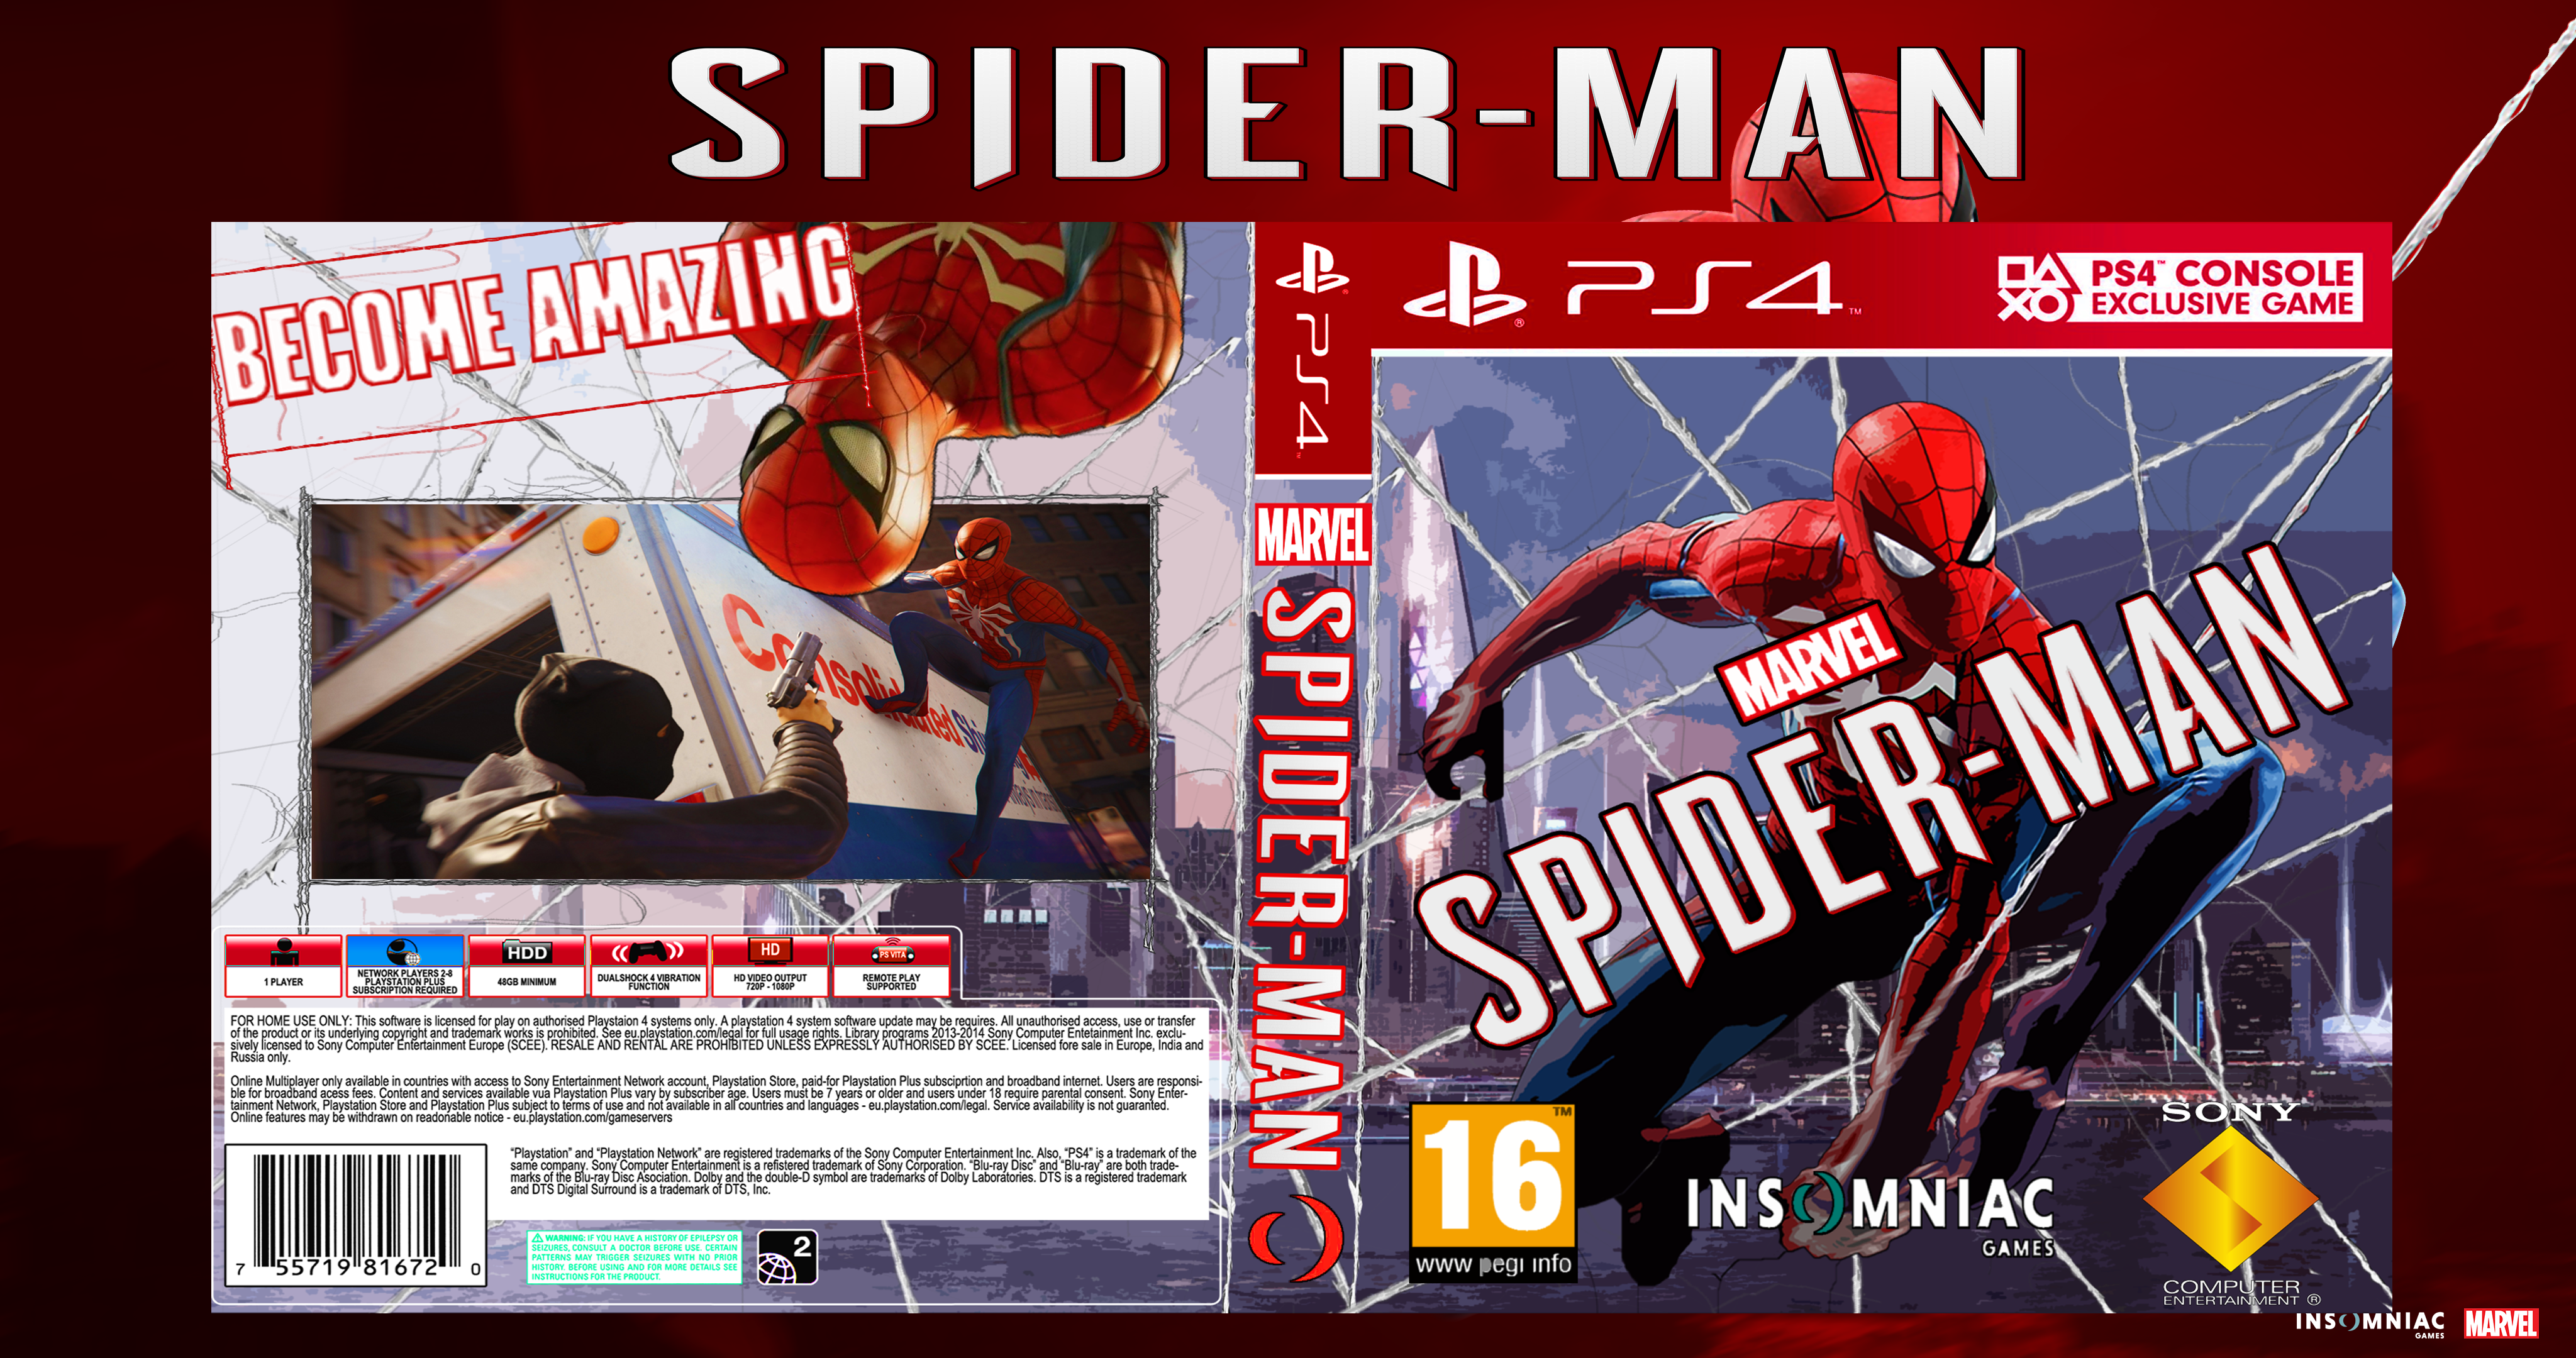 SPIDER-MAN box cover